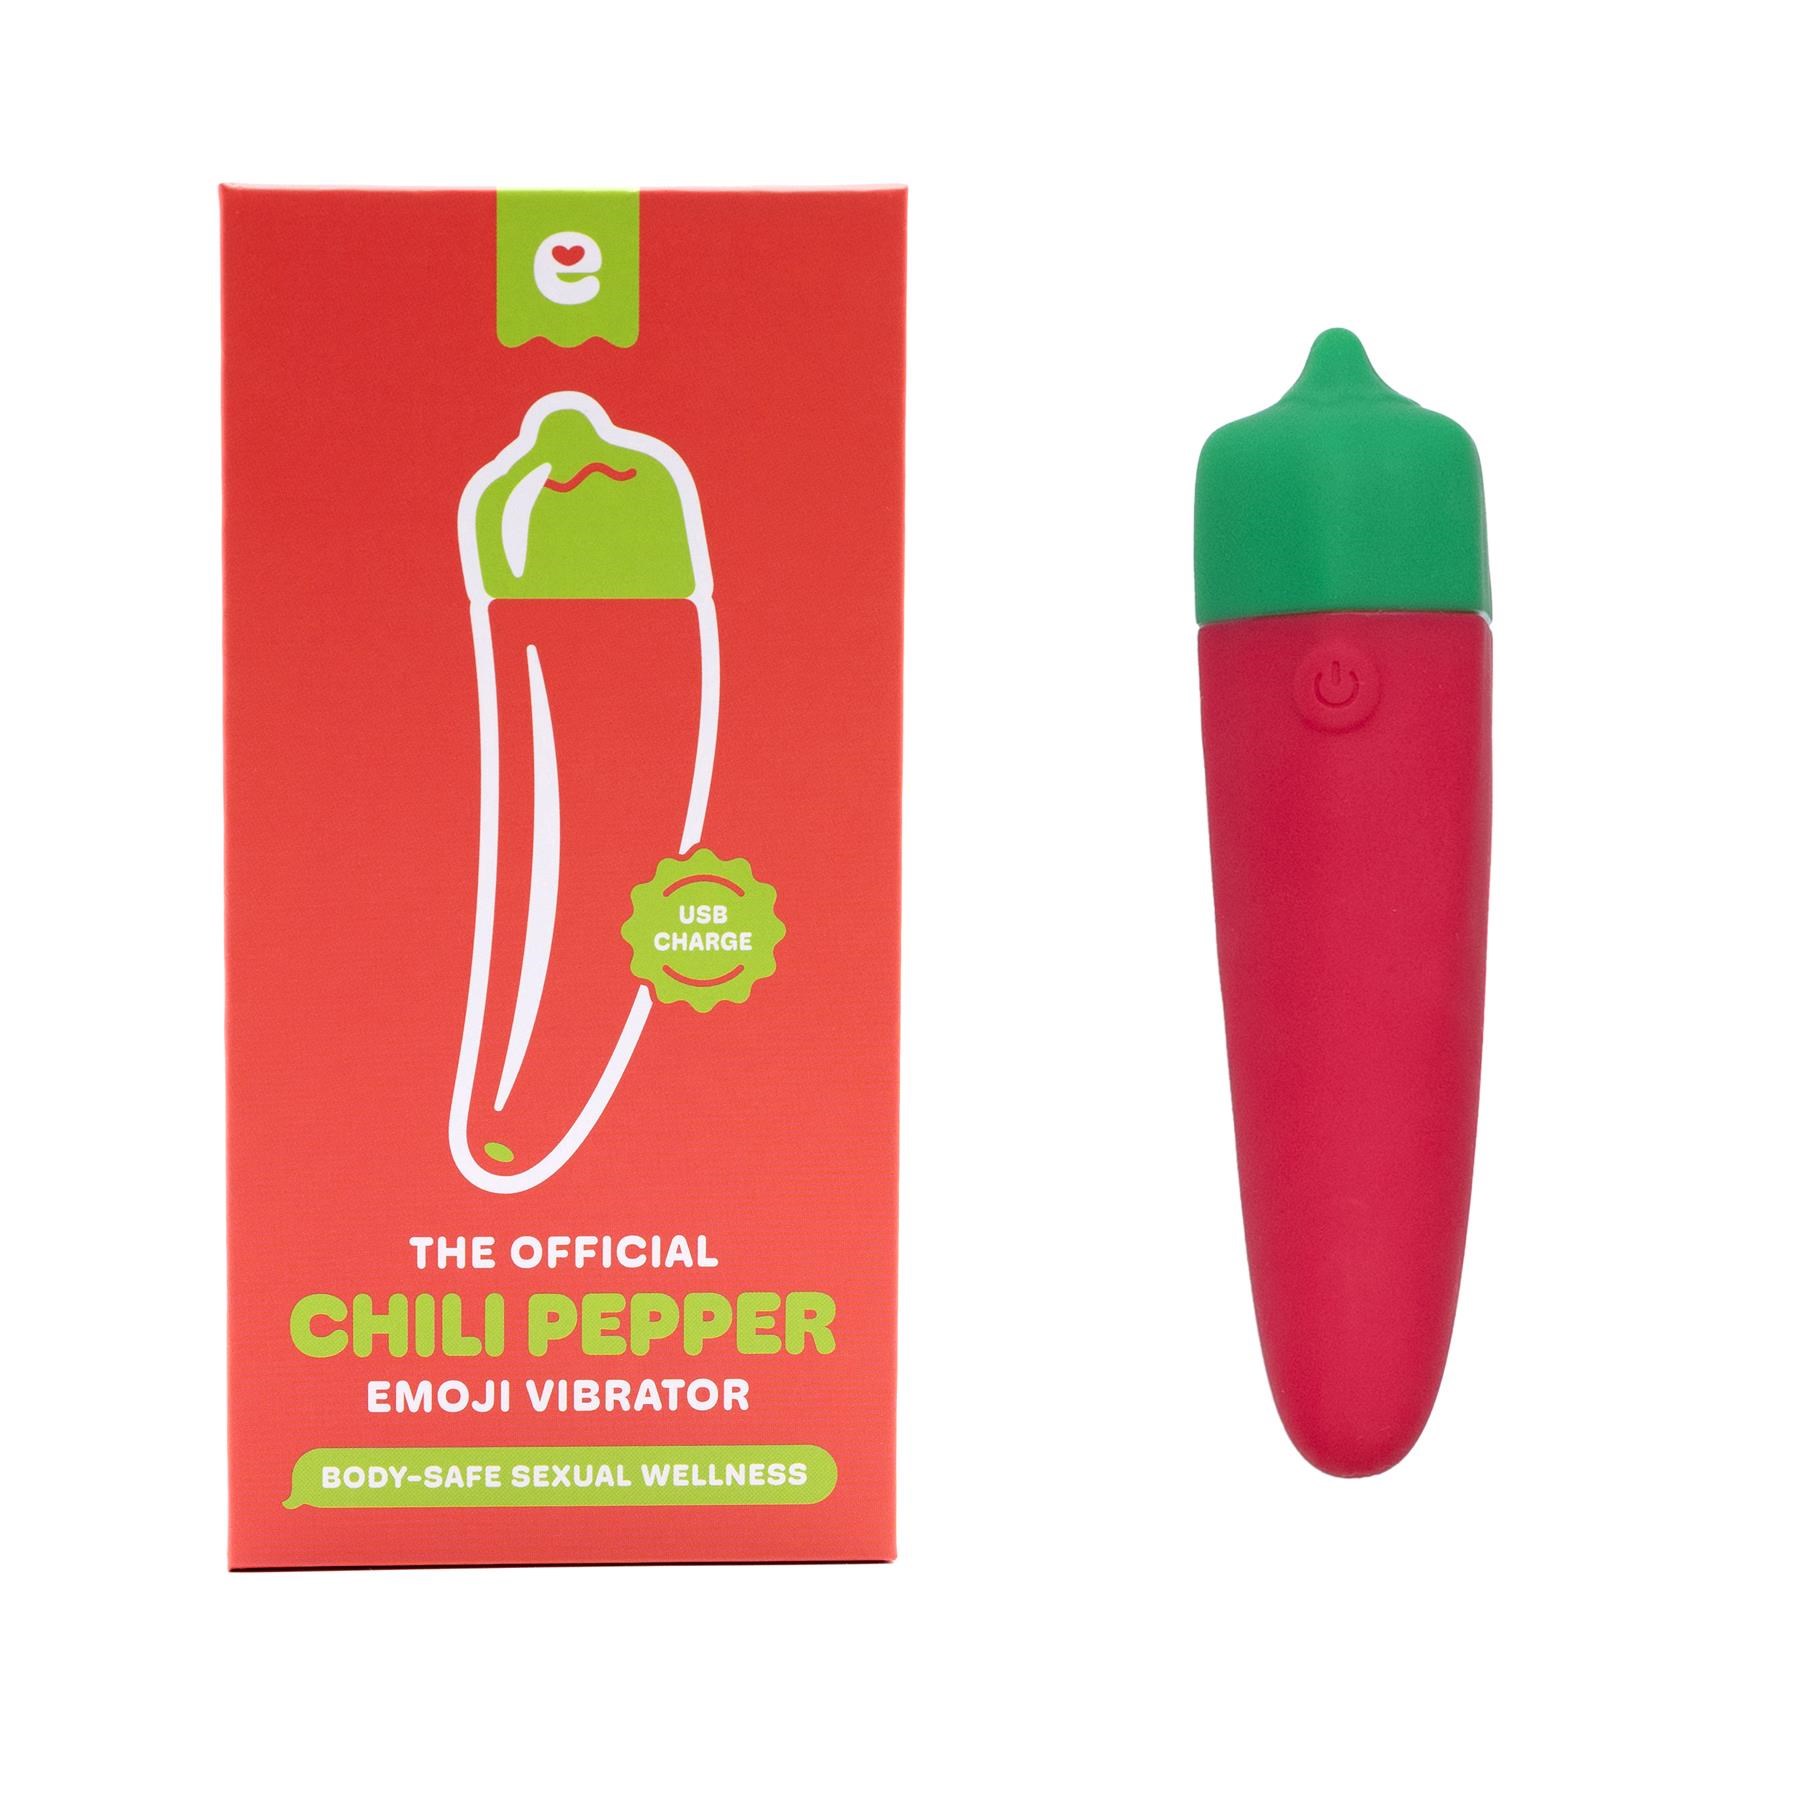 Emojibator Chili Pepper Emoji Vibrator - Product and Packaging